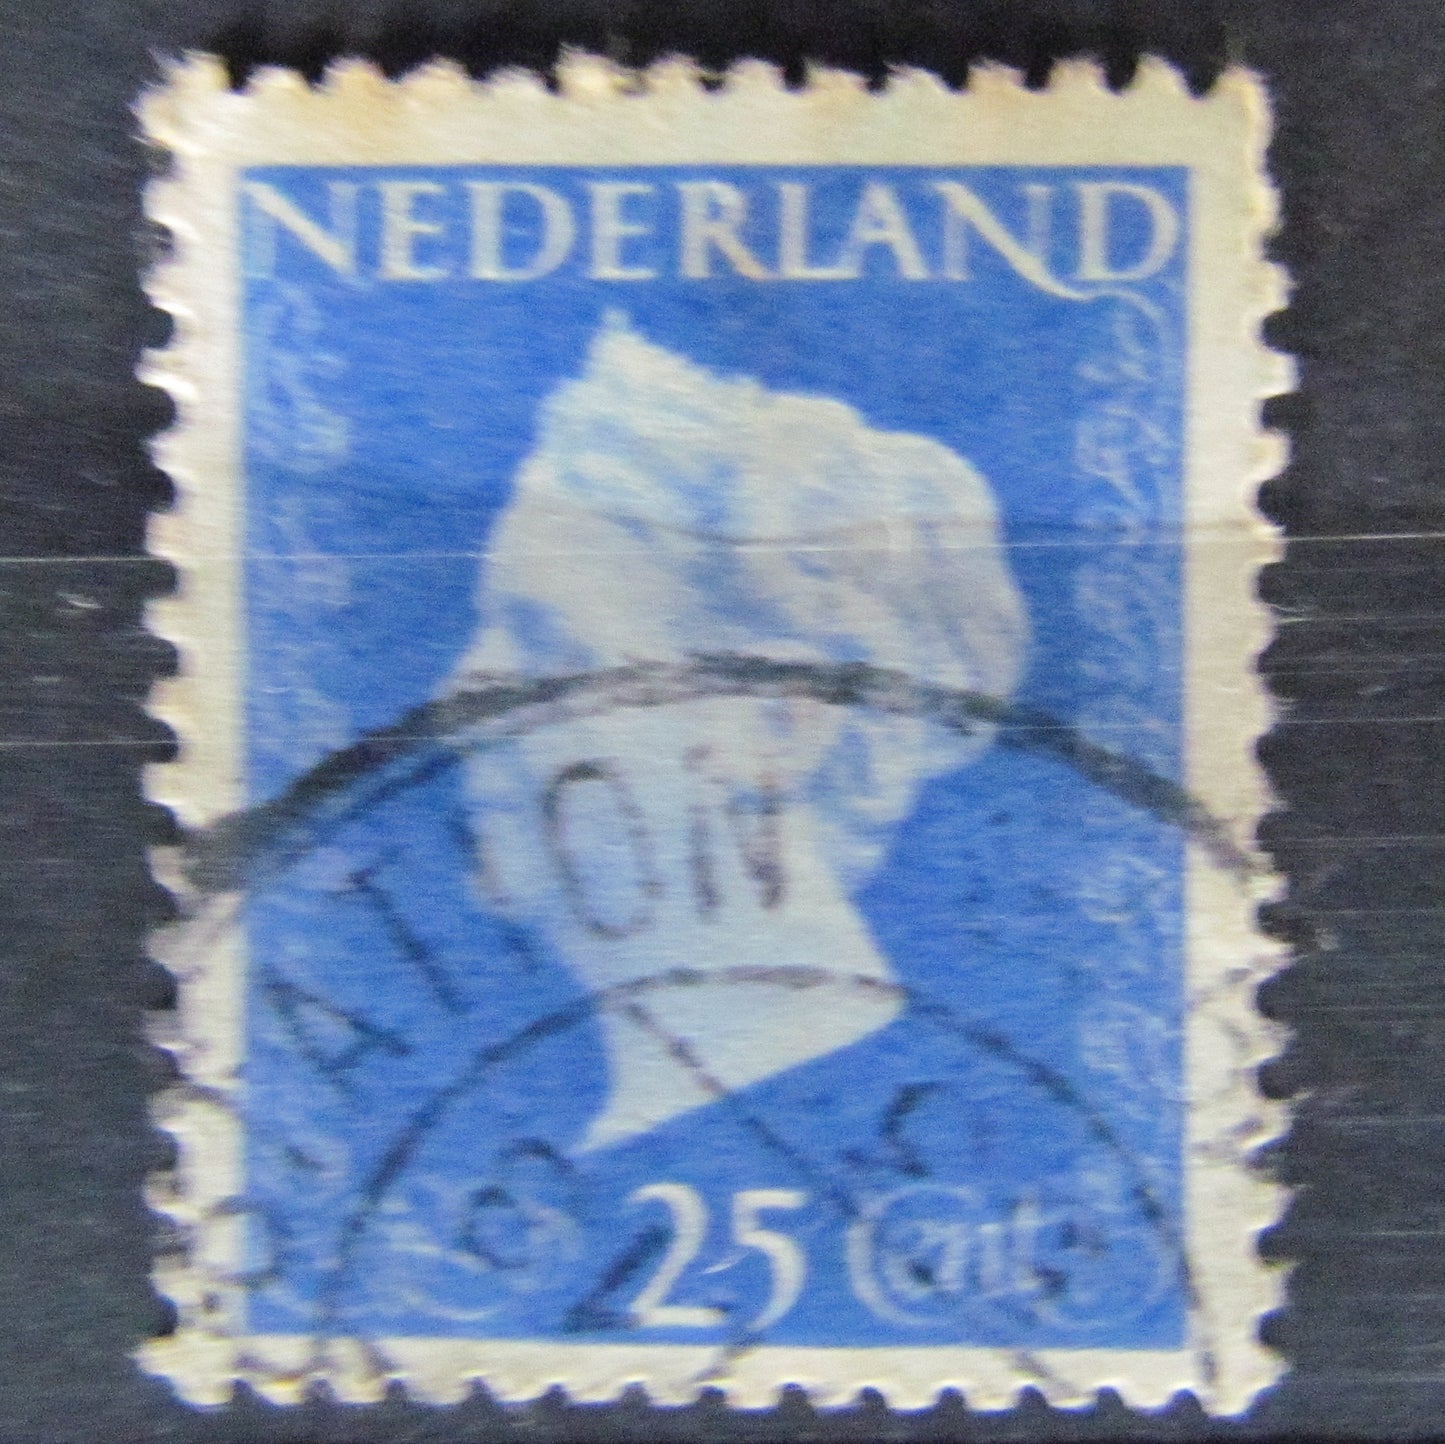 Dutch Netherlands 1946 25 Cent Queen Whilhelmina Blue Stamp Cancelled